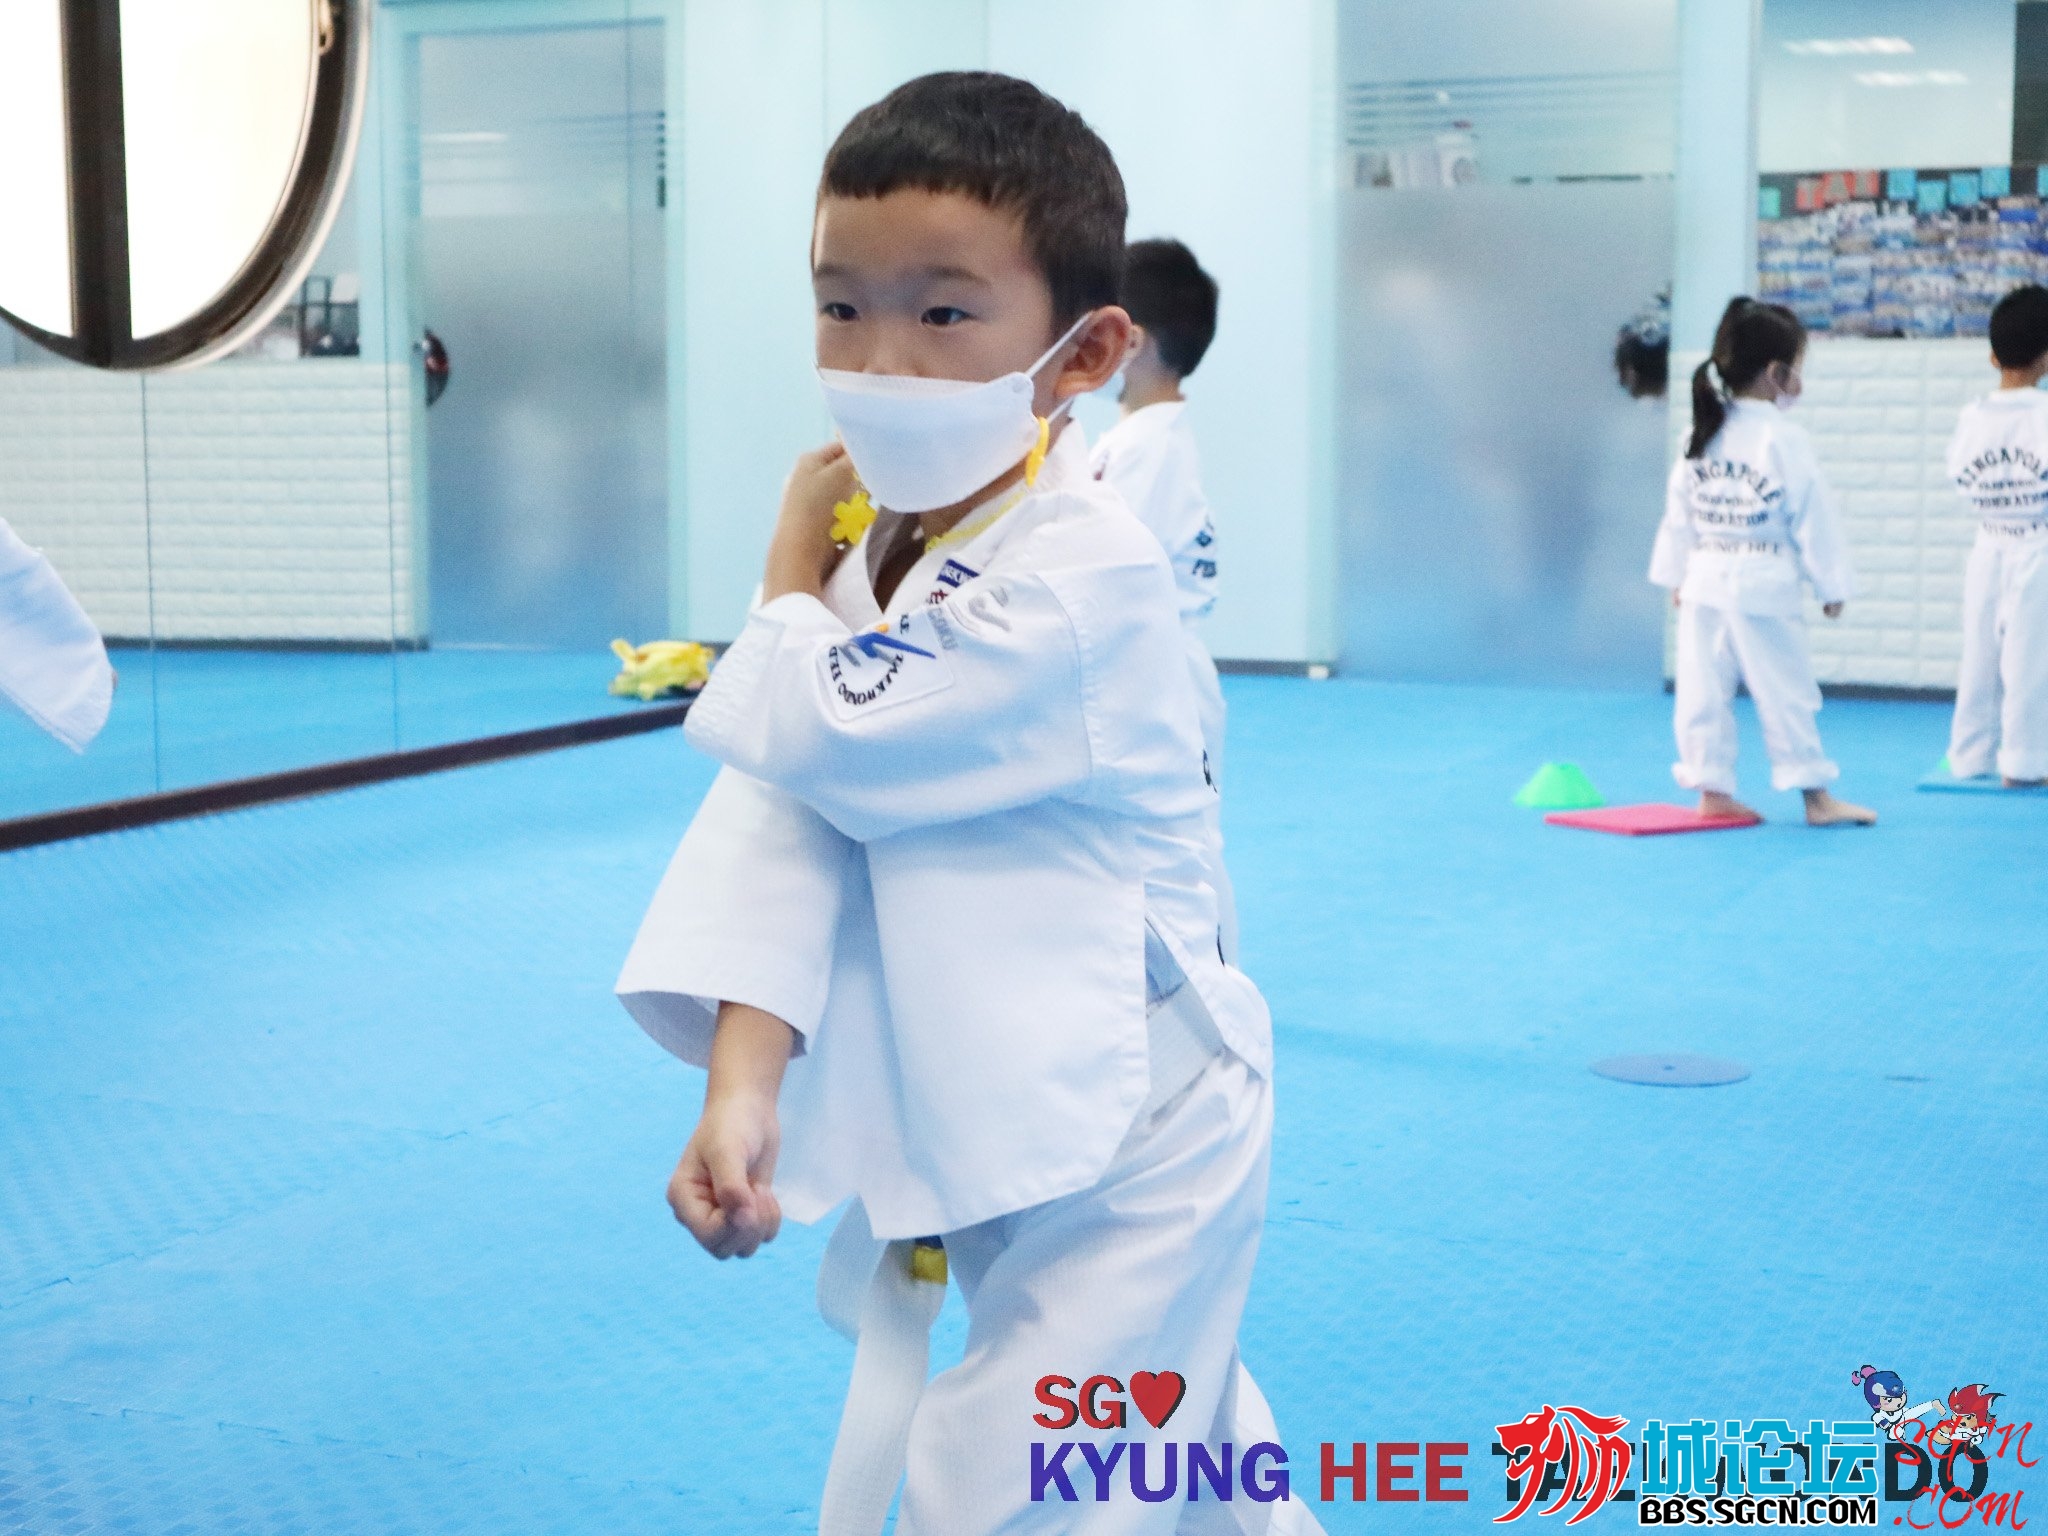 Kyunghee Taekwondo 4.jpg